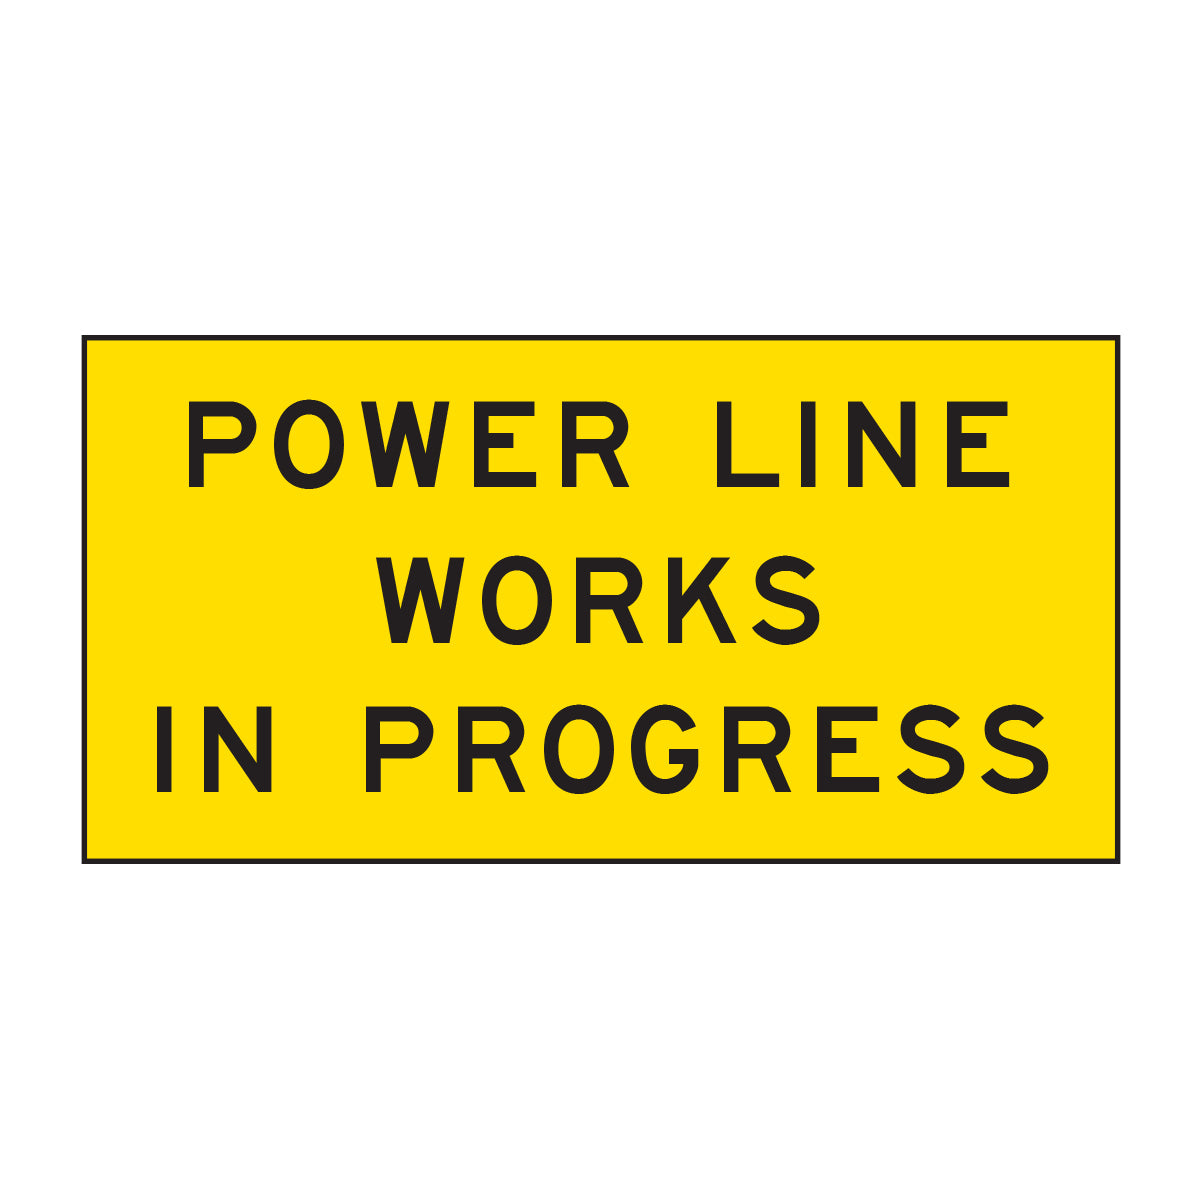 Warning: Power Line Works In Progress Sign